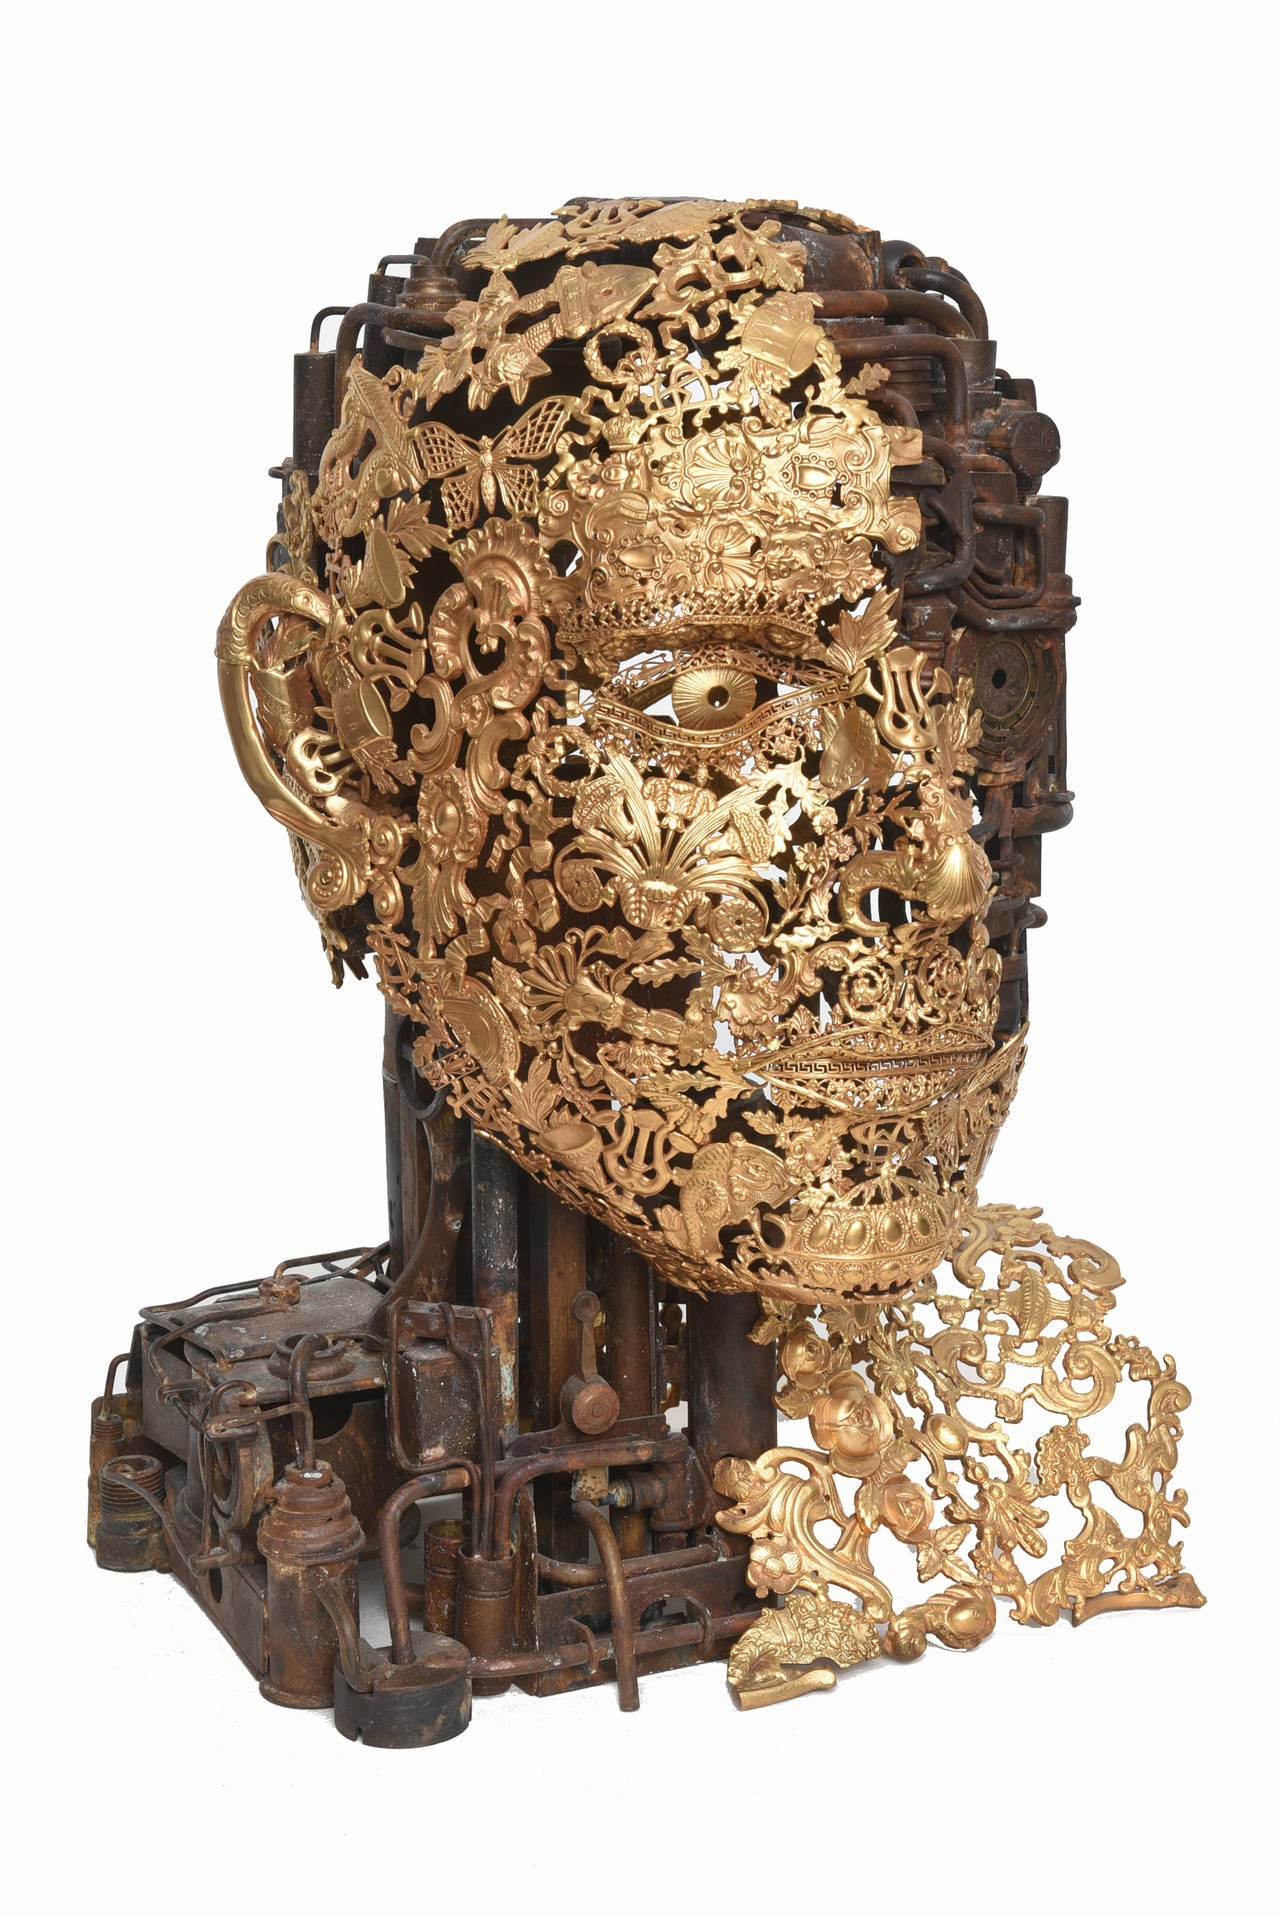 Alain BELLINO Figurative Sculpture - Numero 1 - Bronze ornaments sculpture